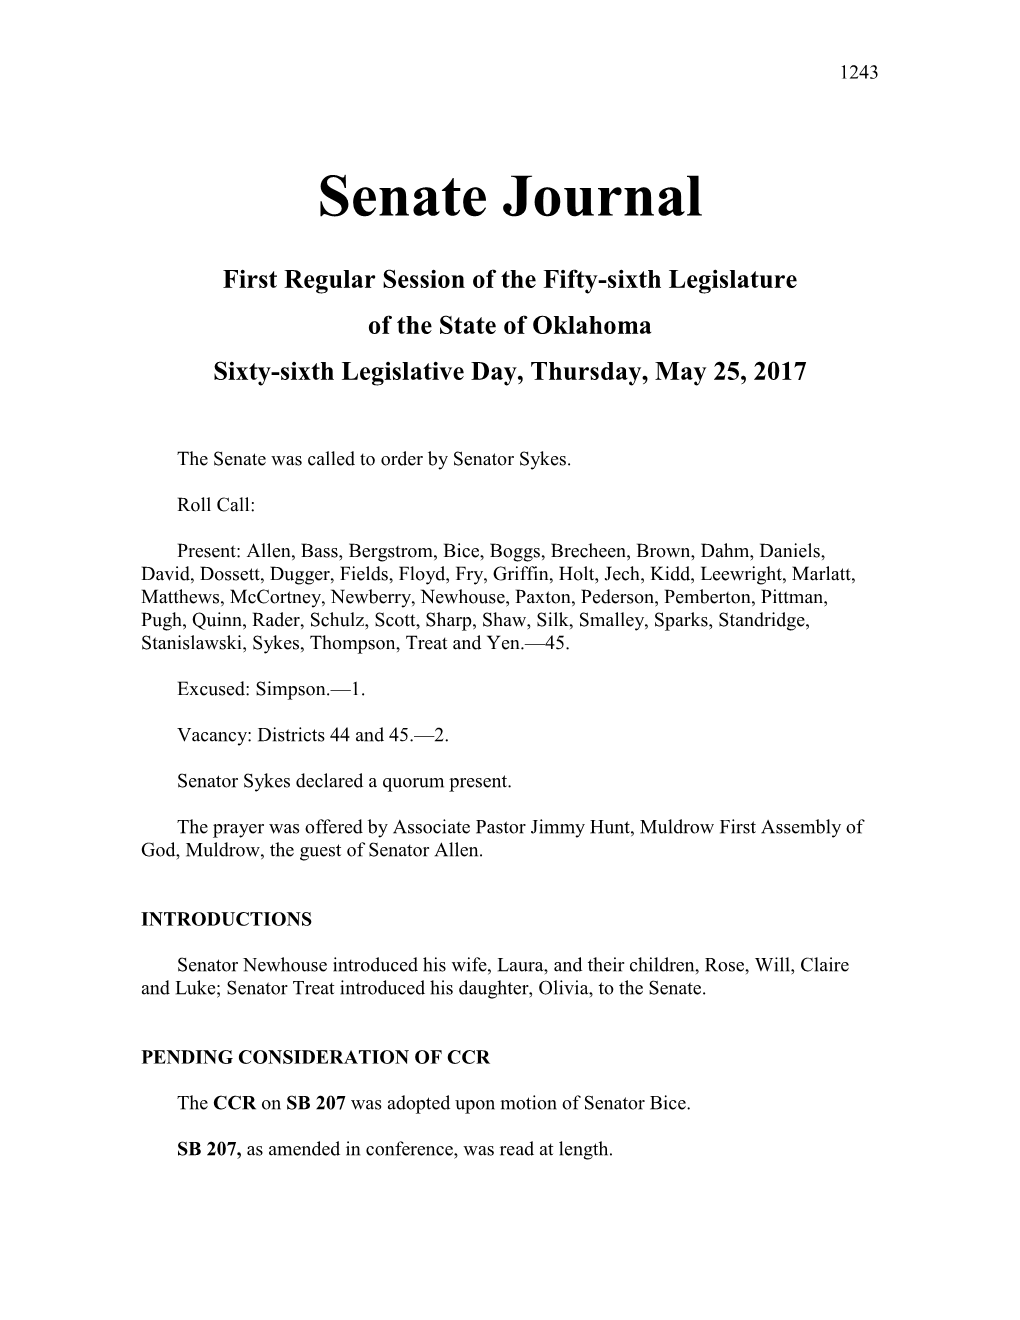 Senate Journal May 25, 2017